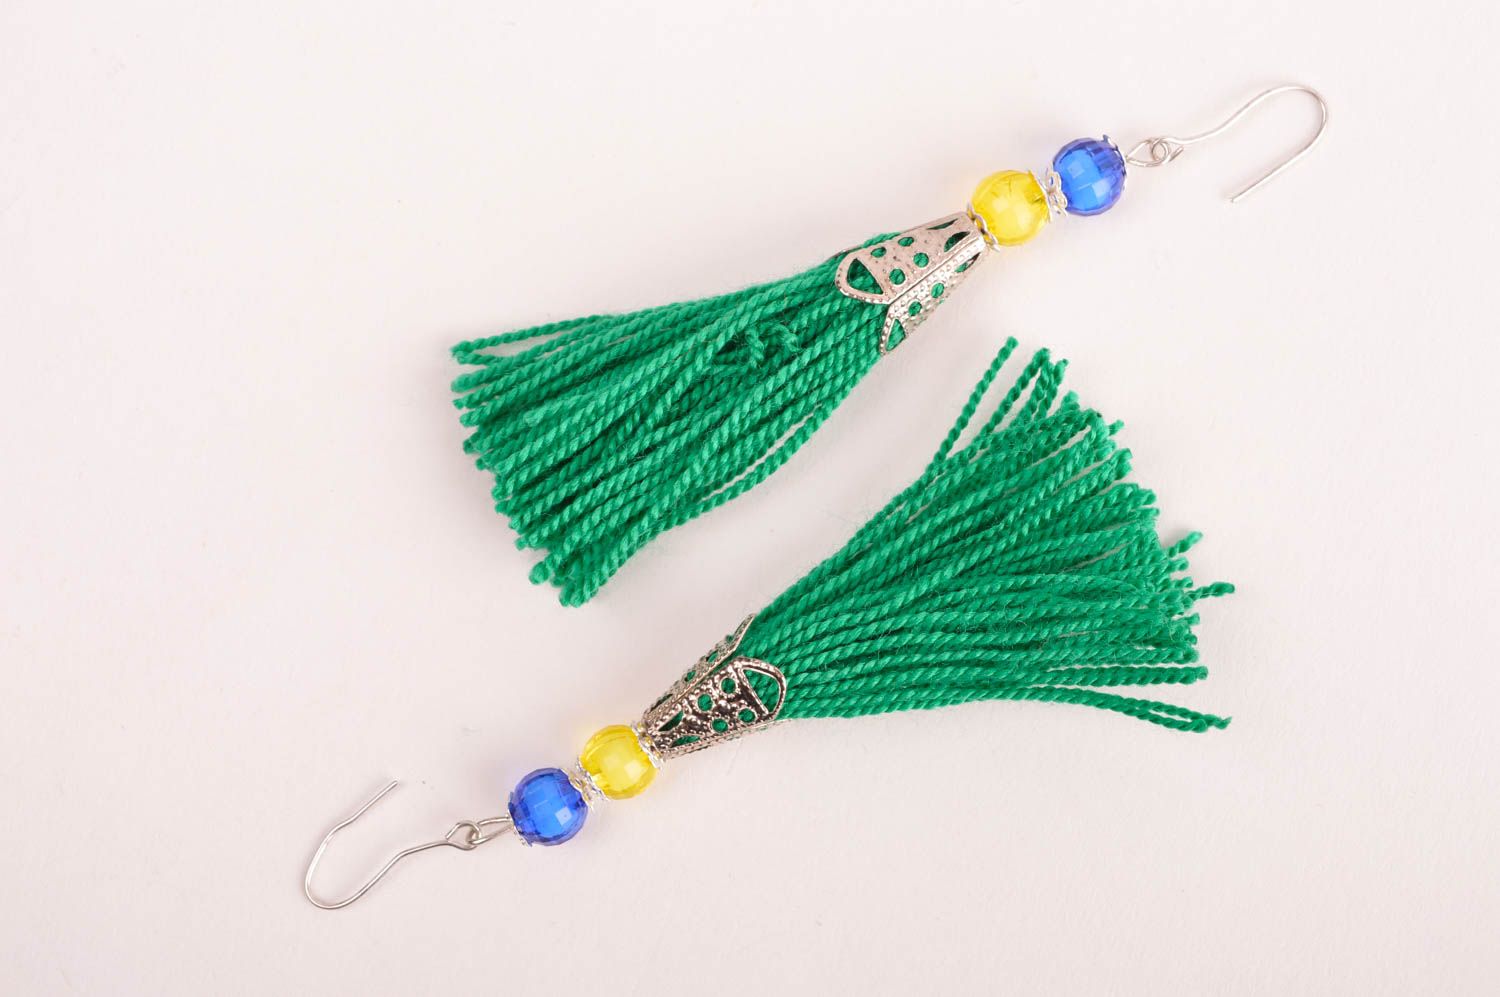 Handmade tassel earrings thread earrings textile jewelry designs gifts for her photo 5